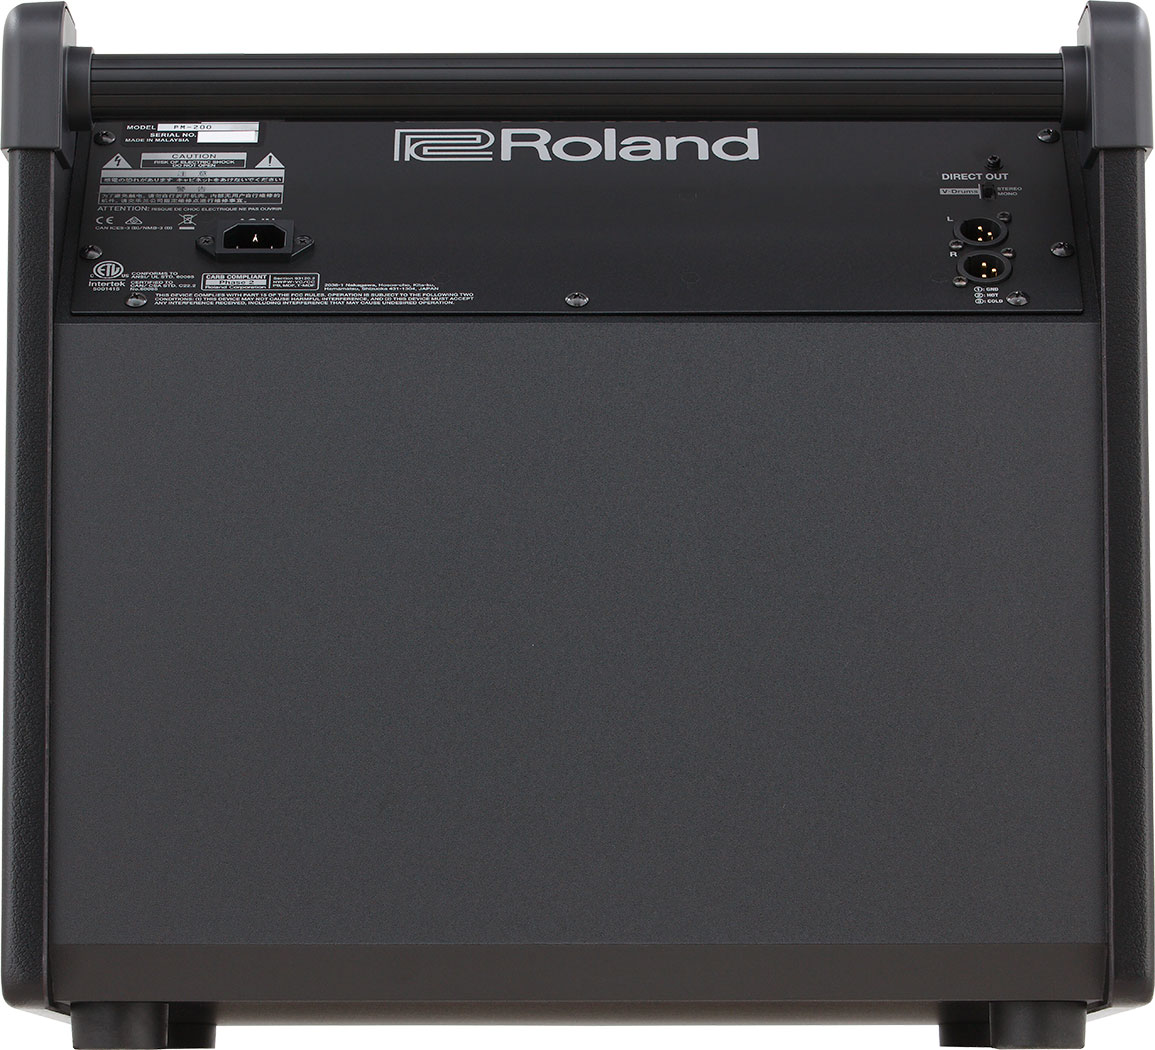 Roland Pm-200 - E-Drum Monitor System - Variation 2